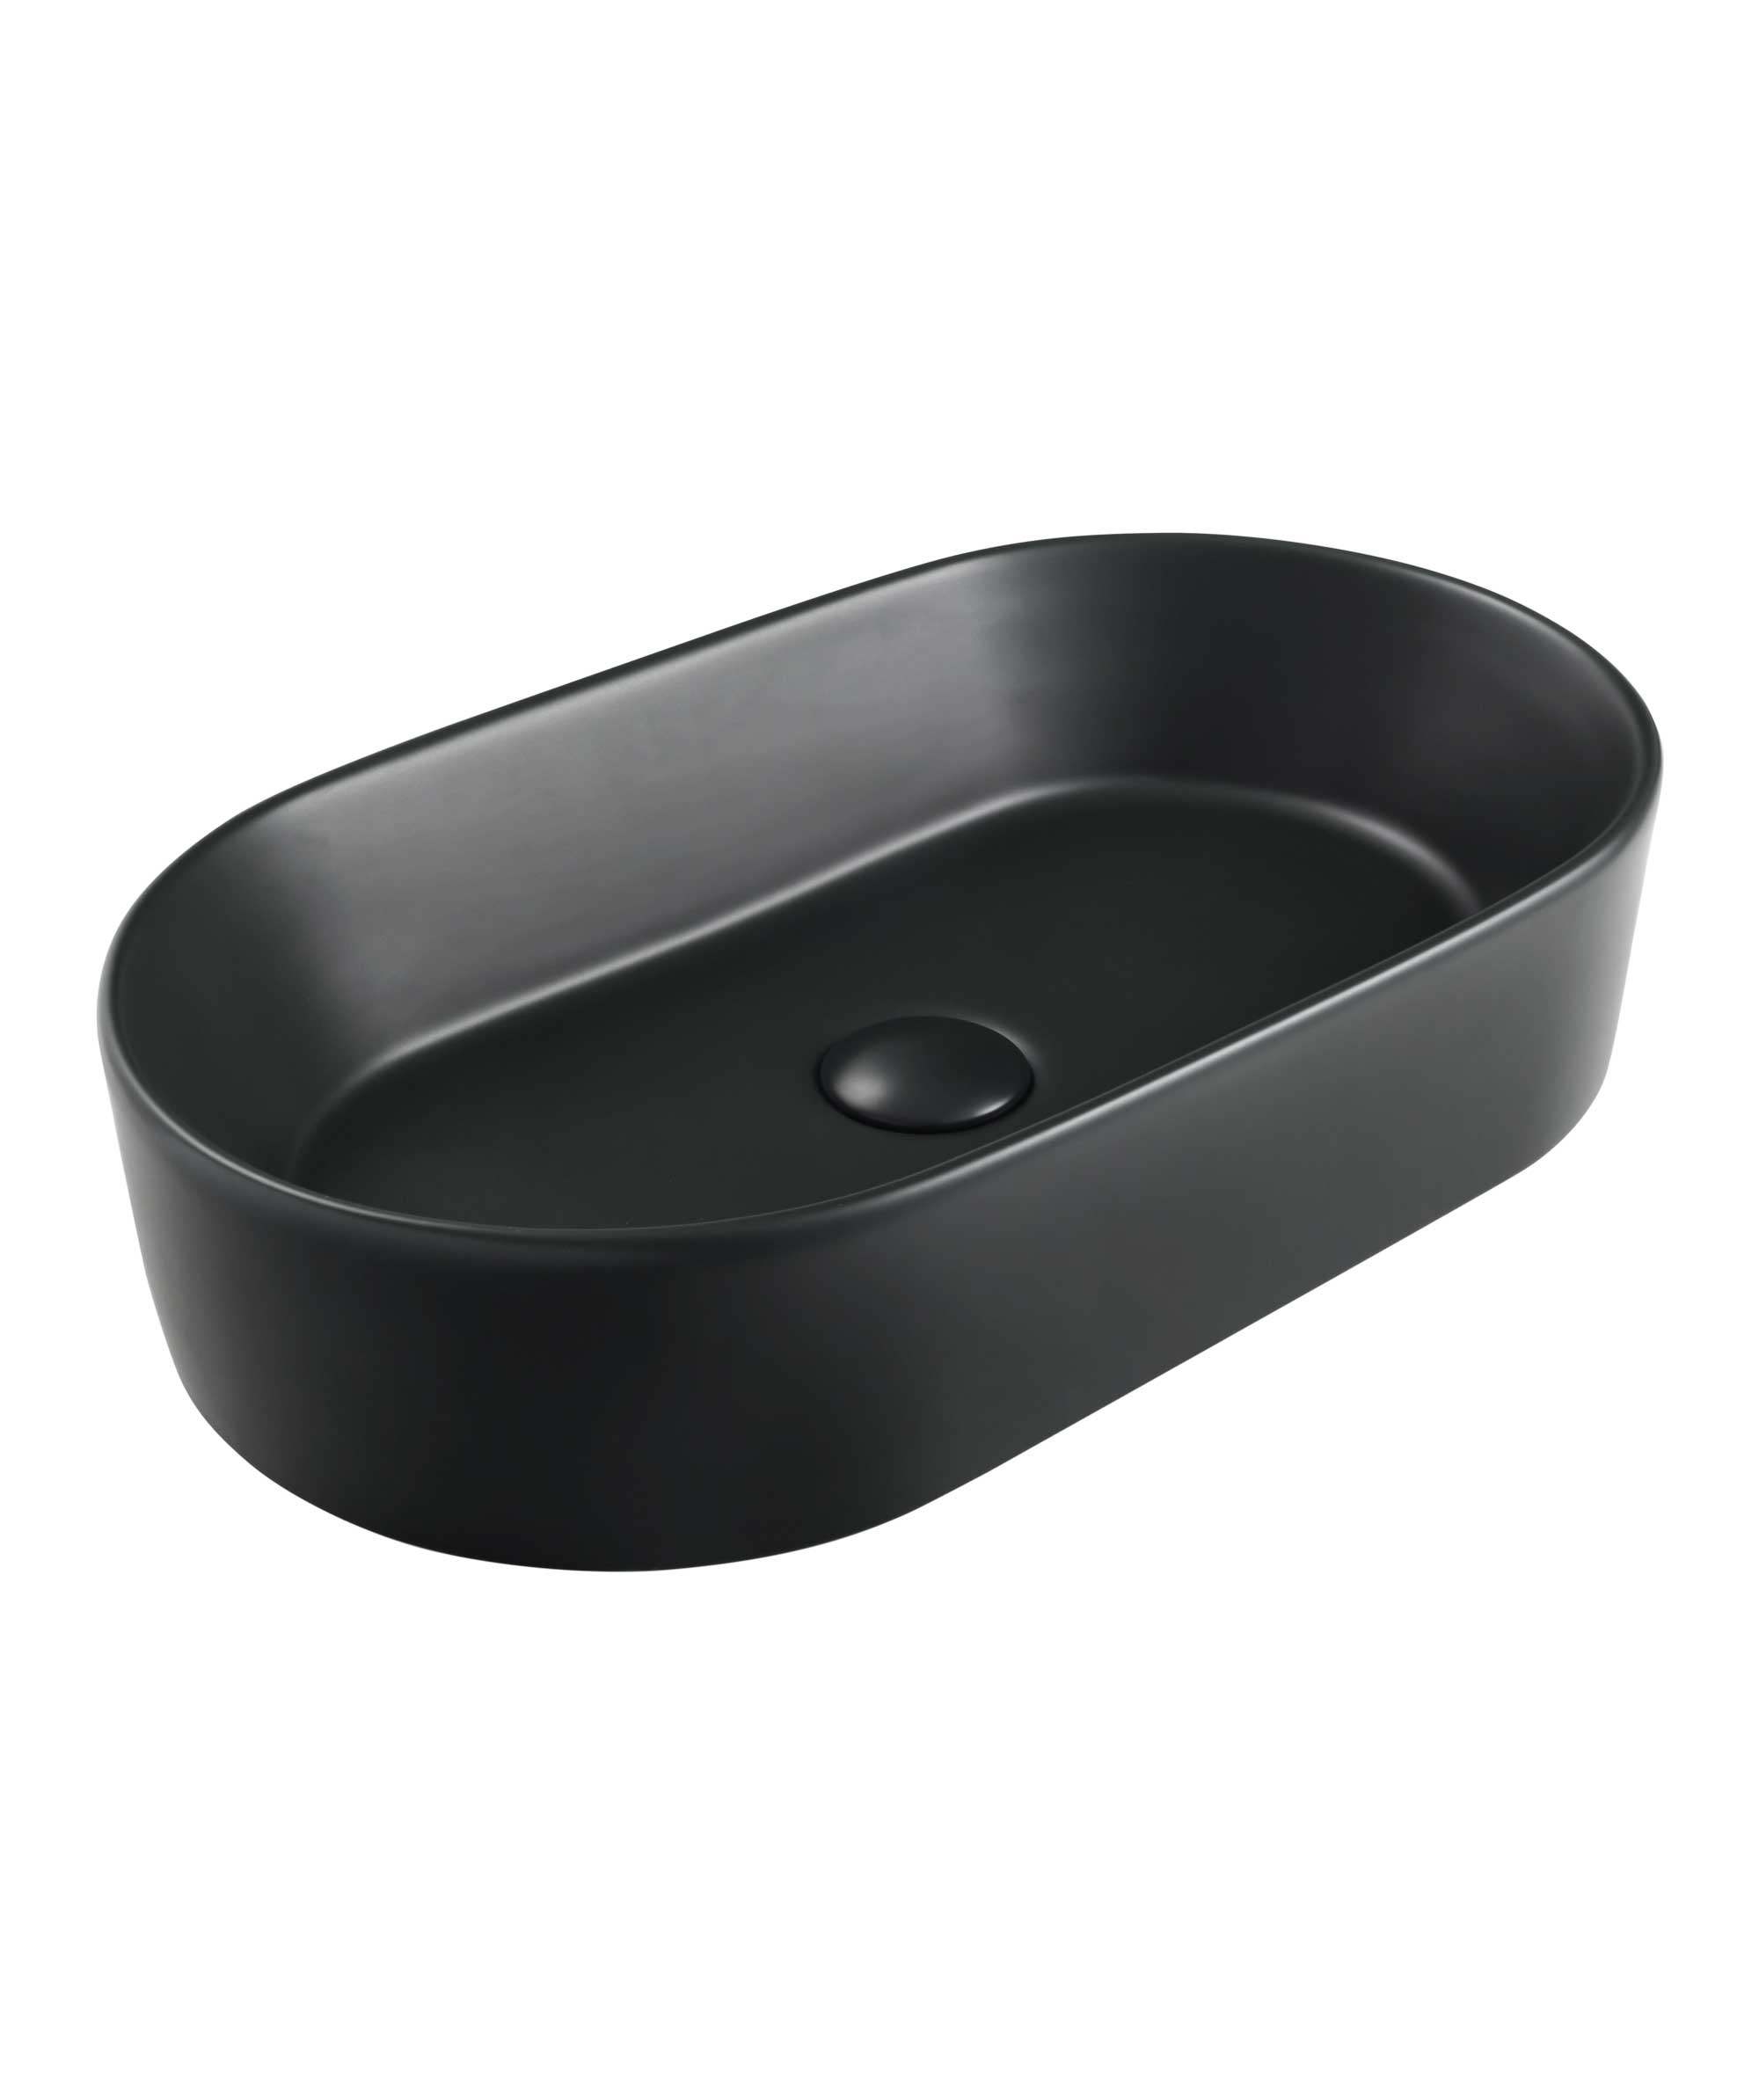 Aurora 530 ceramic basin - Black Silk Matte